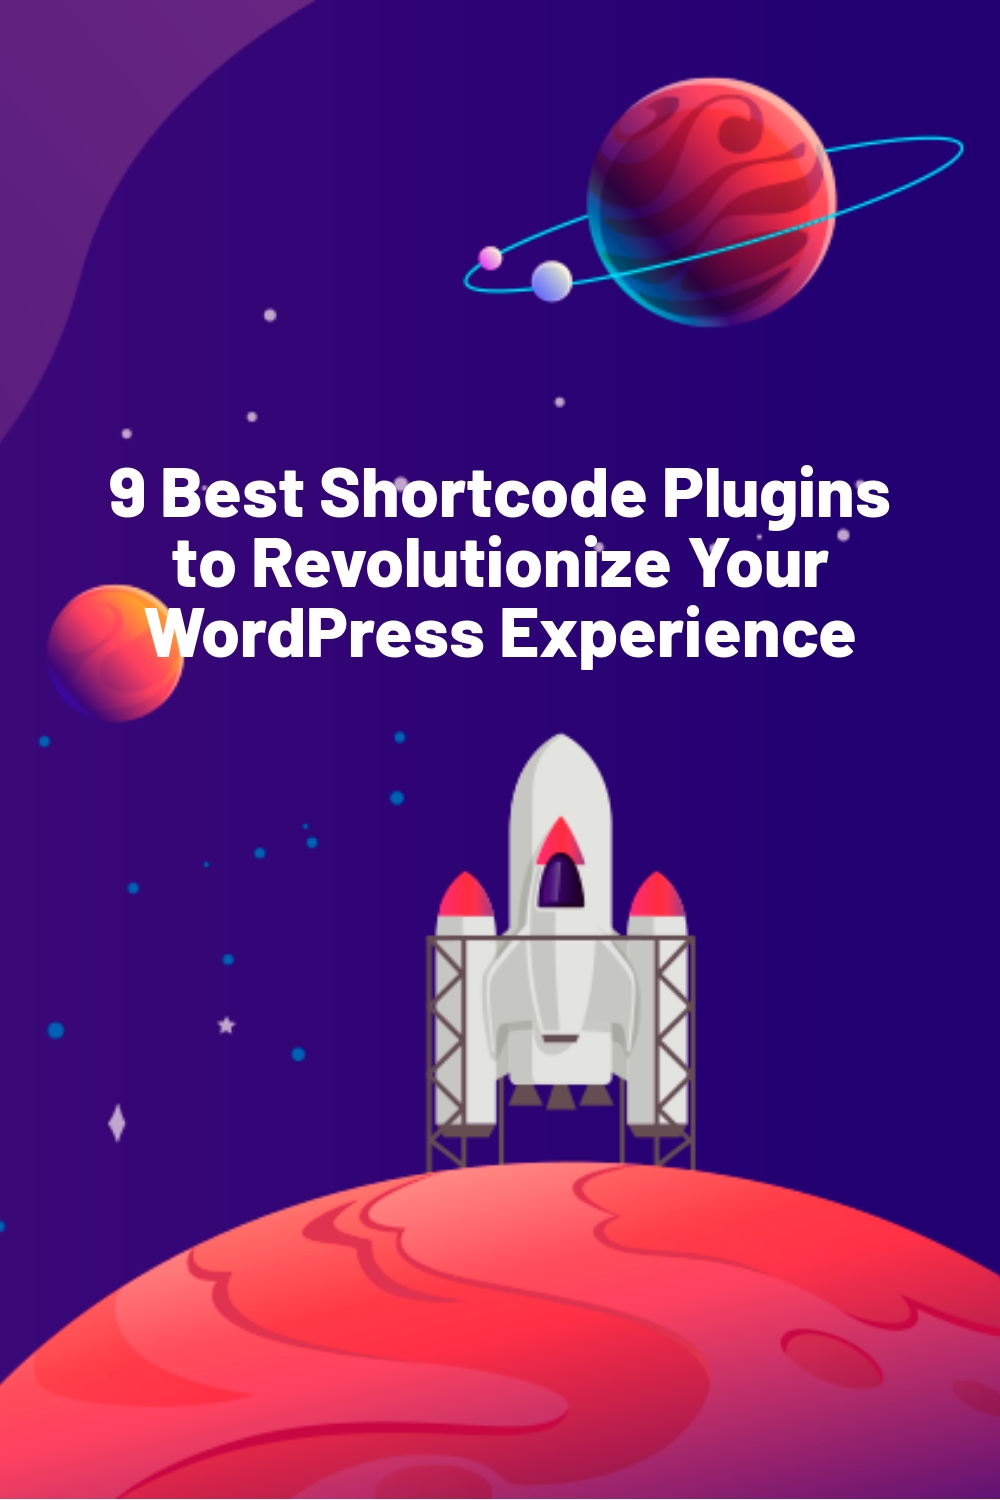 9 Best Shortcode Plugins to Revolutionize Your WordPress Experience